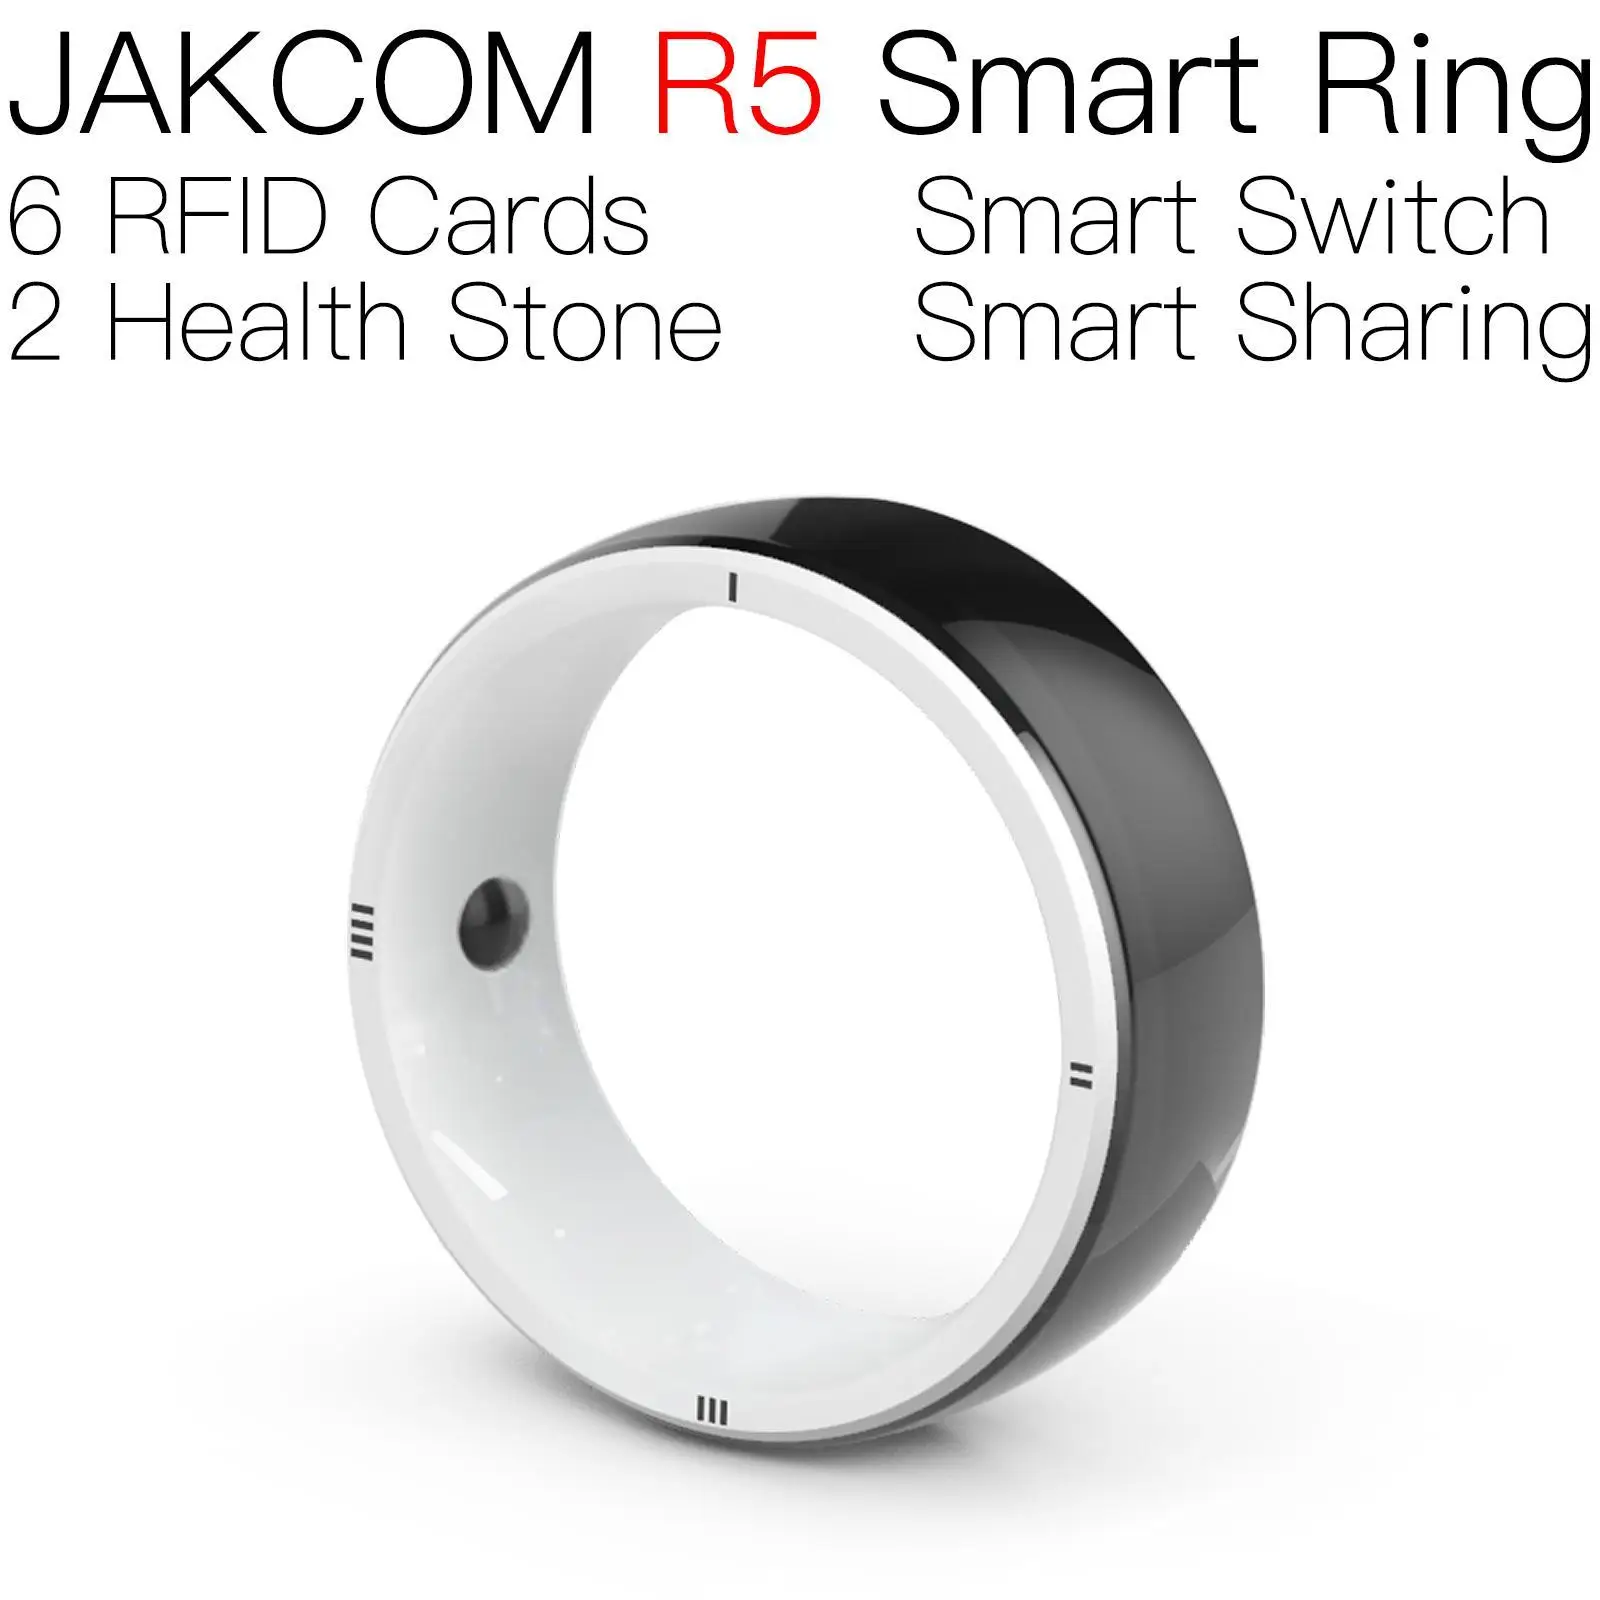 

JAKCOM R5 Smart Ring Newer than stick massage smartwatch d20 smarth watch yunmai zigbee login drag s pad 5 tablet